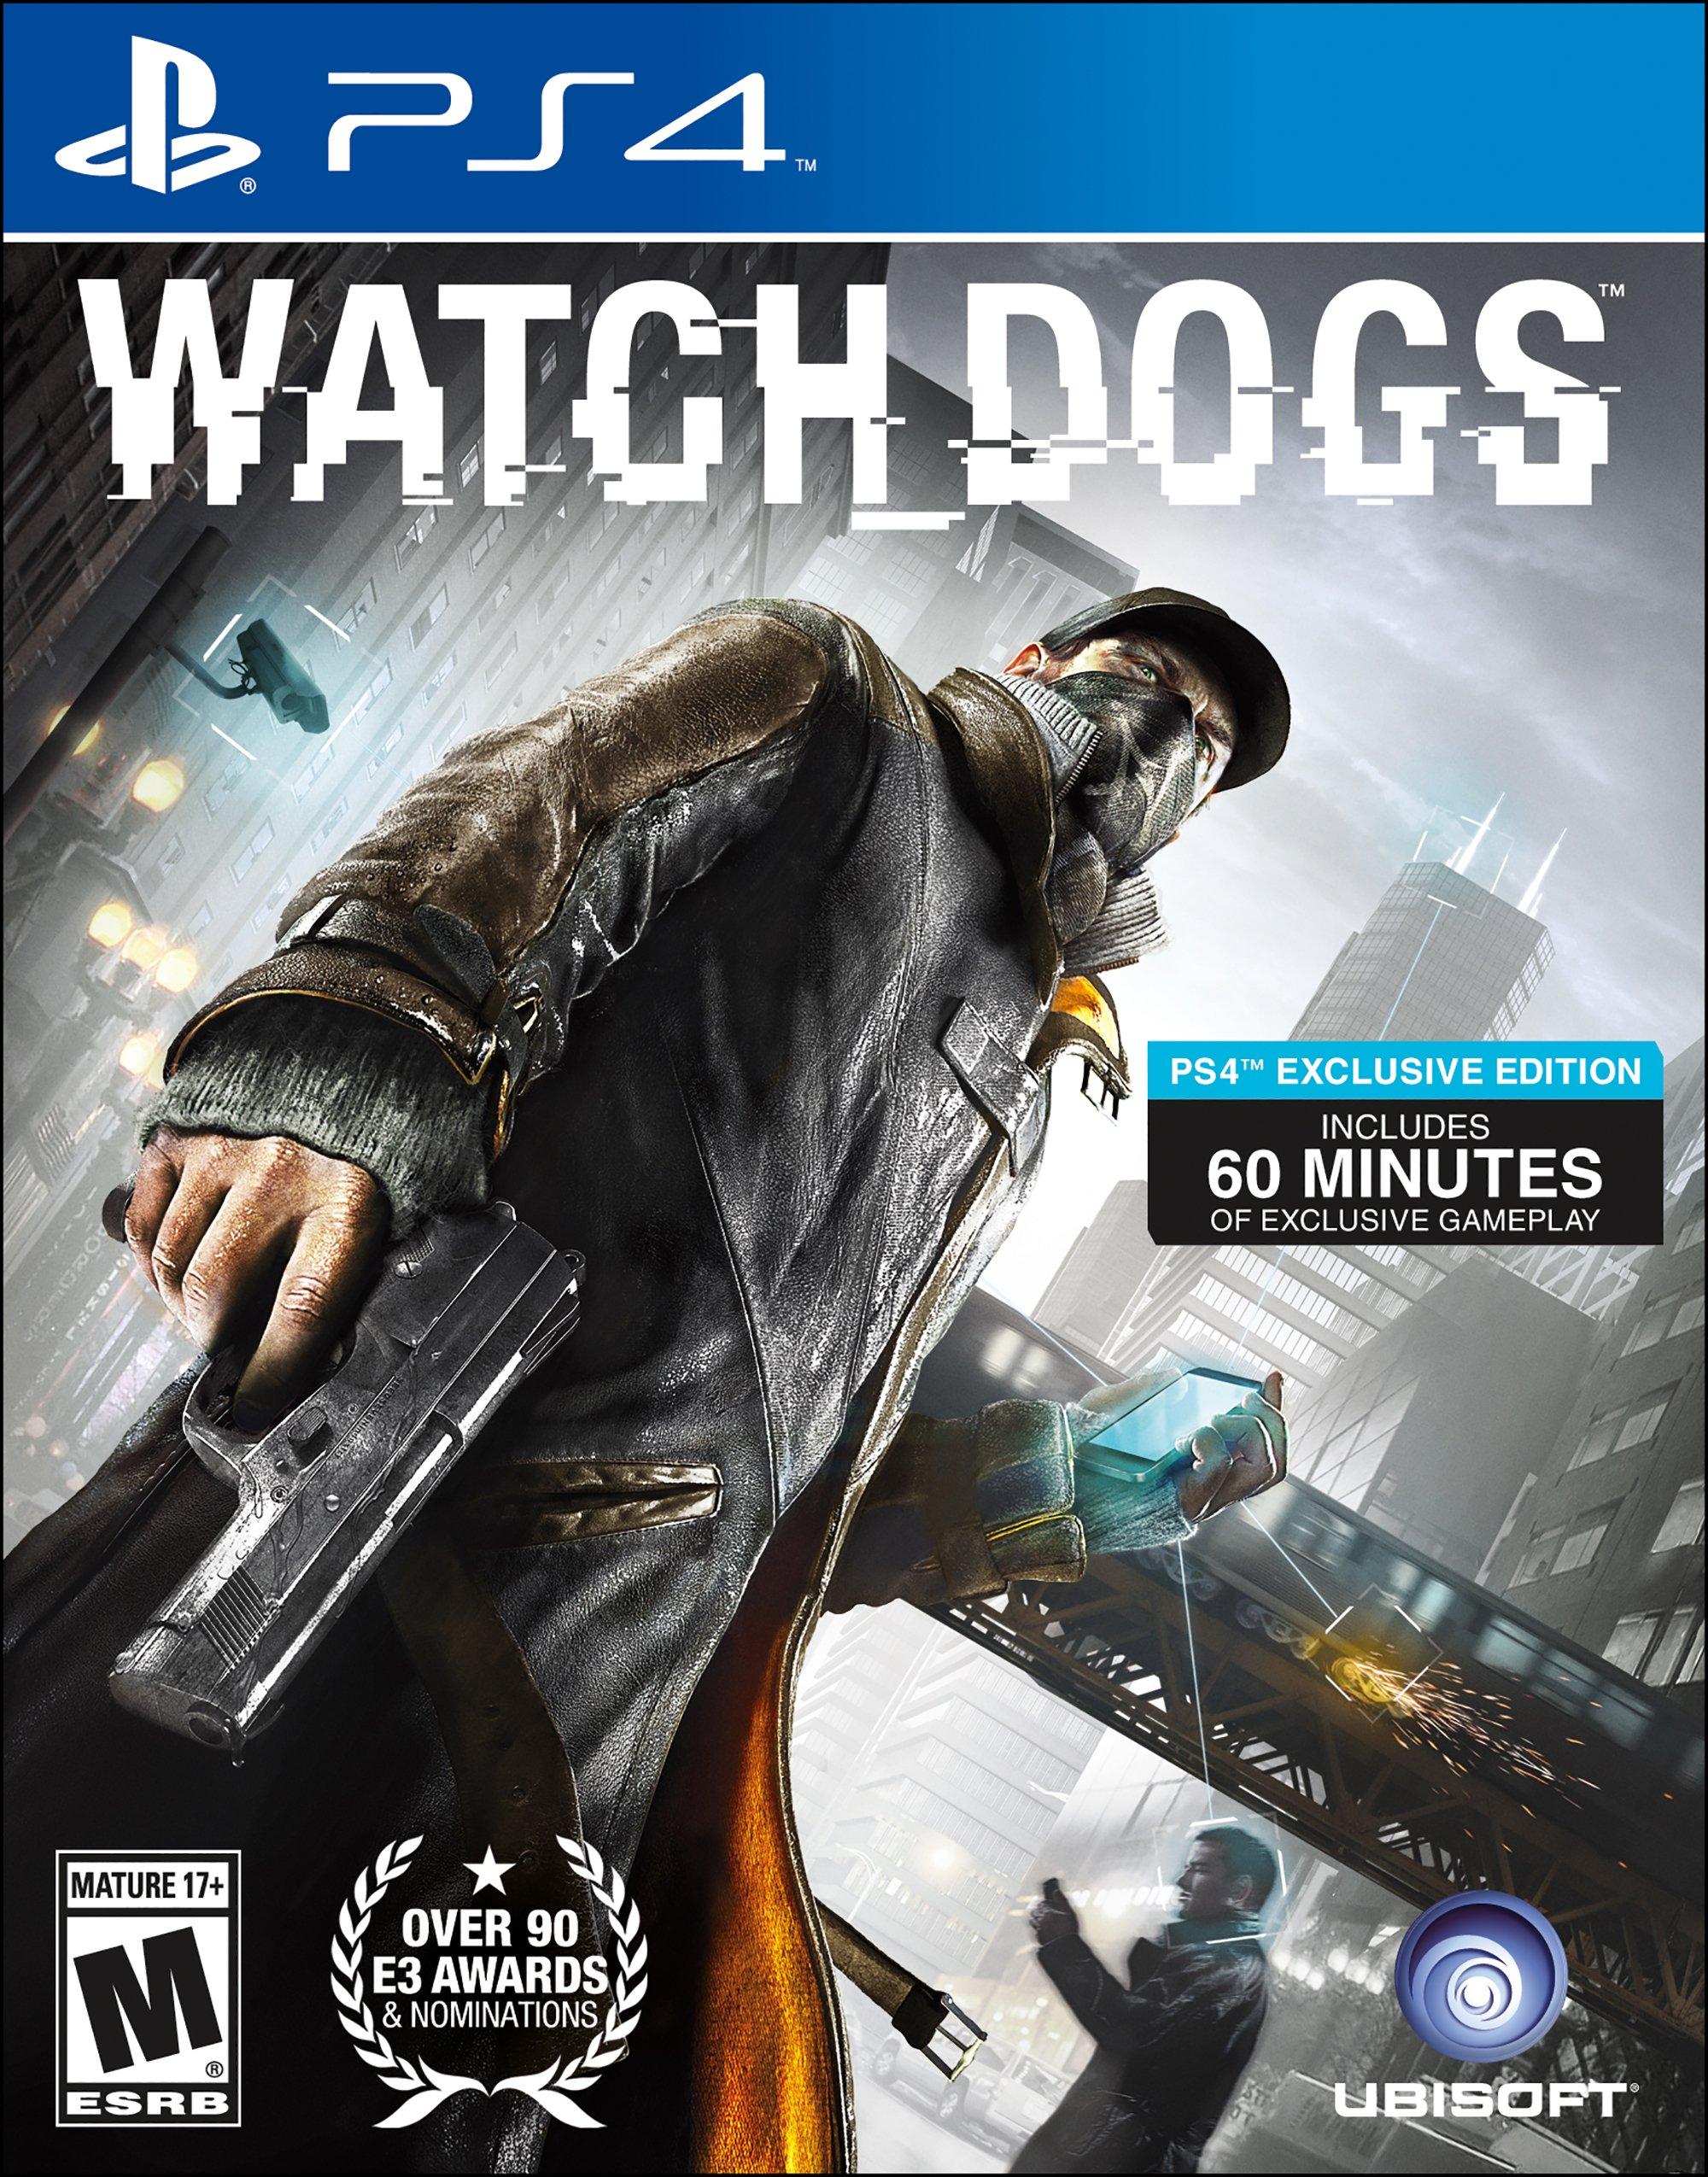 watch dogs 2 ps4 gamestop